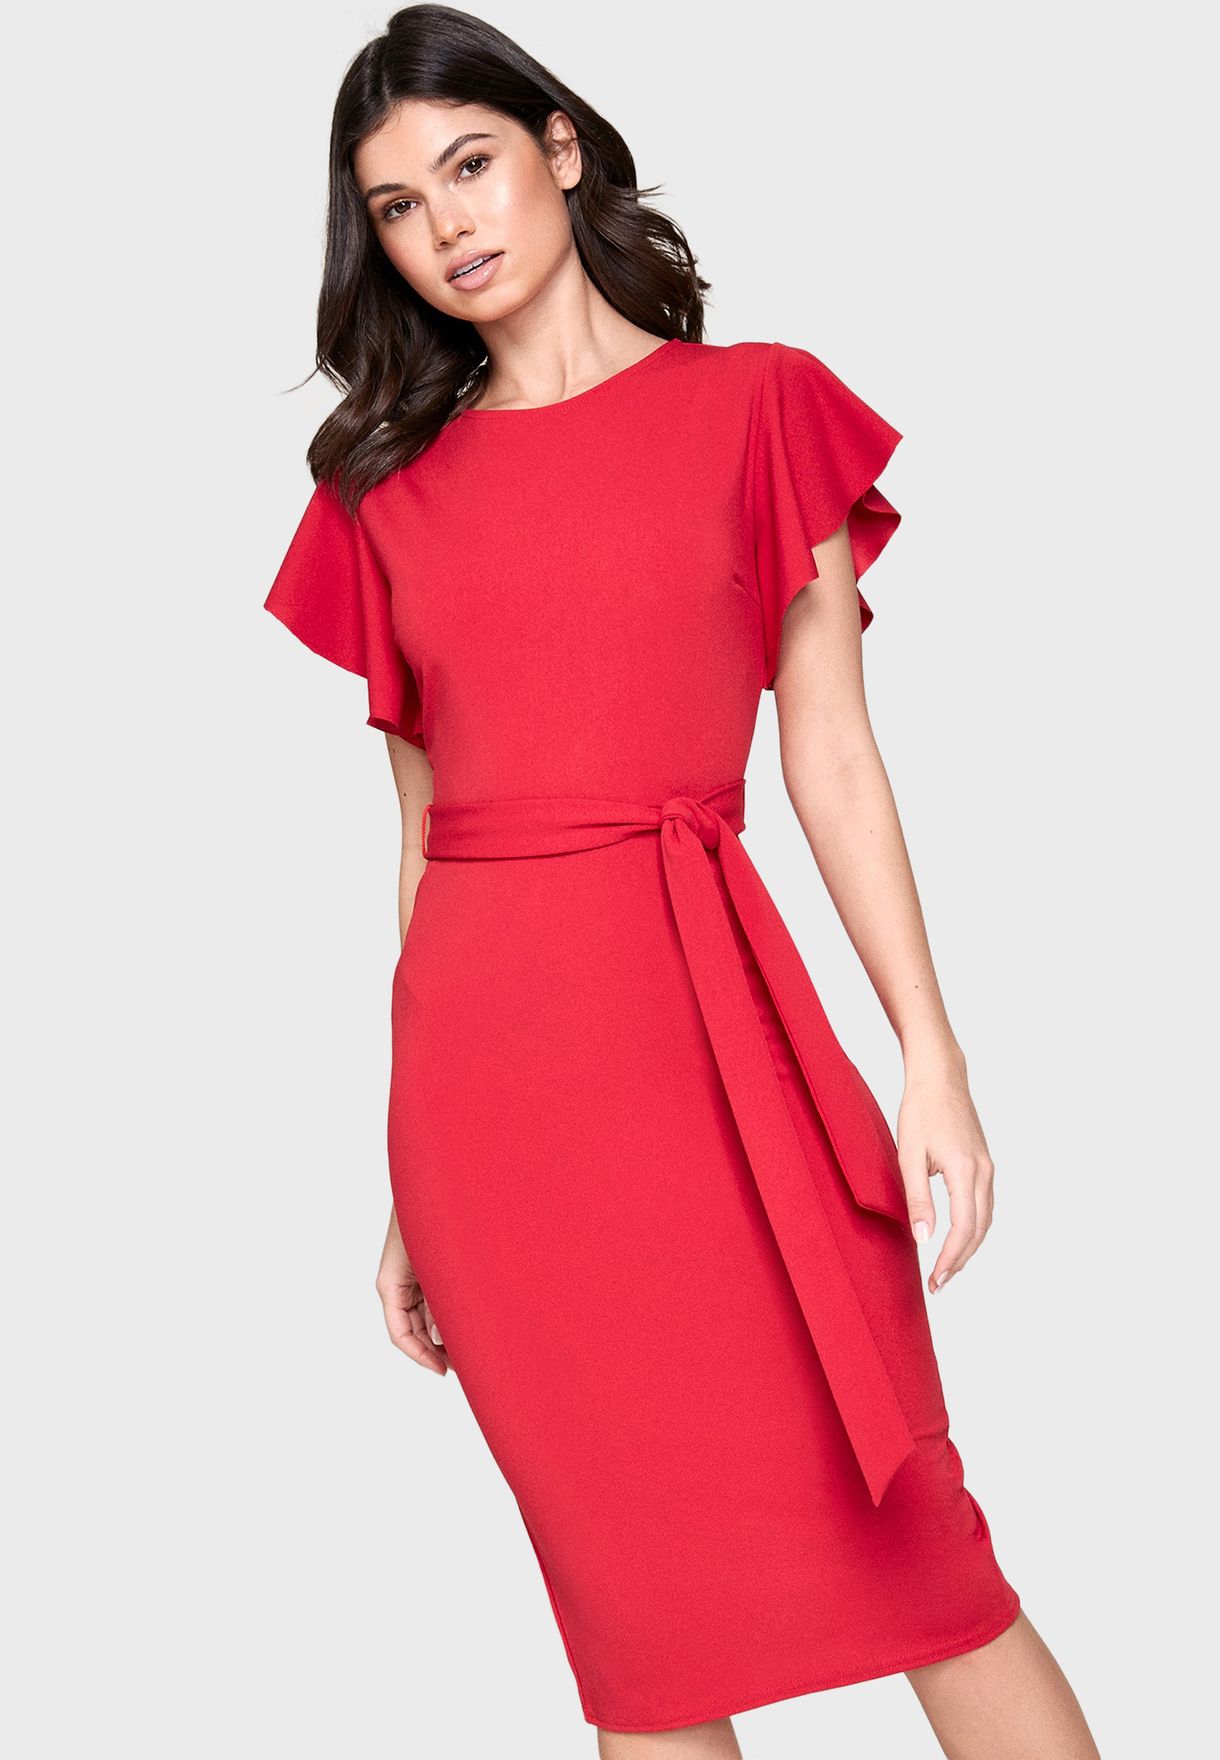 red flute sleeve dress